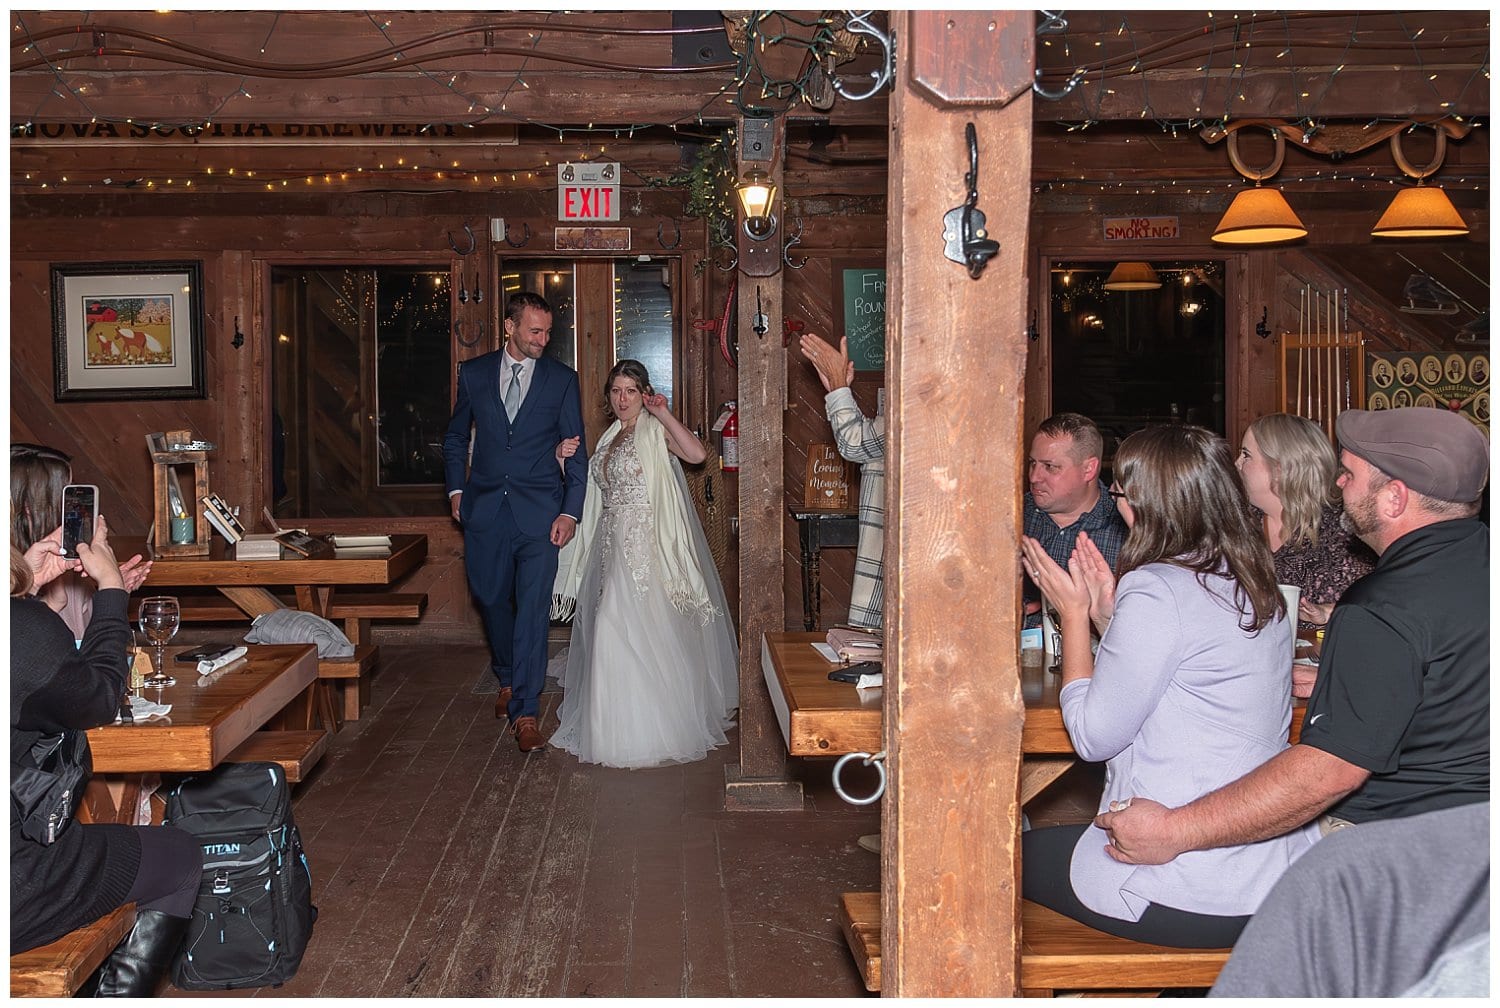 The bride and groom make their entrance into their wedding reception at Hatfield Farm in Nova Scotia.